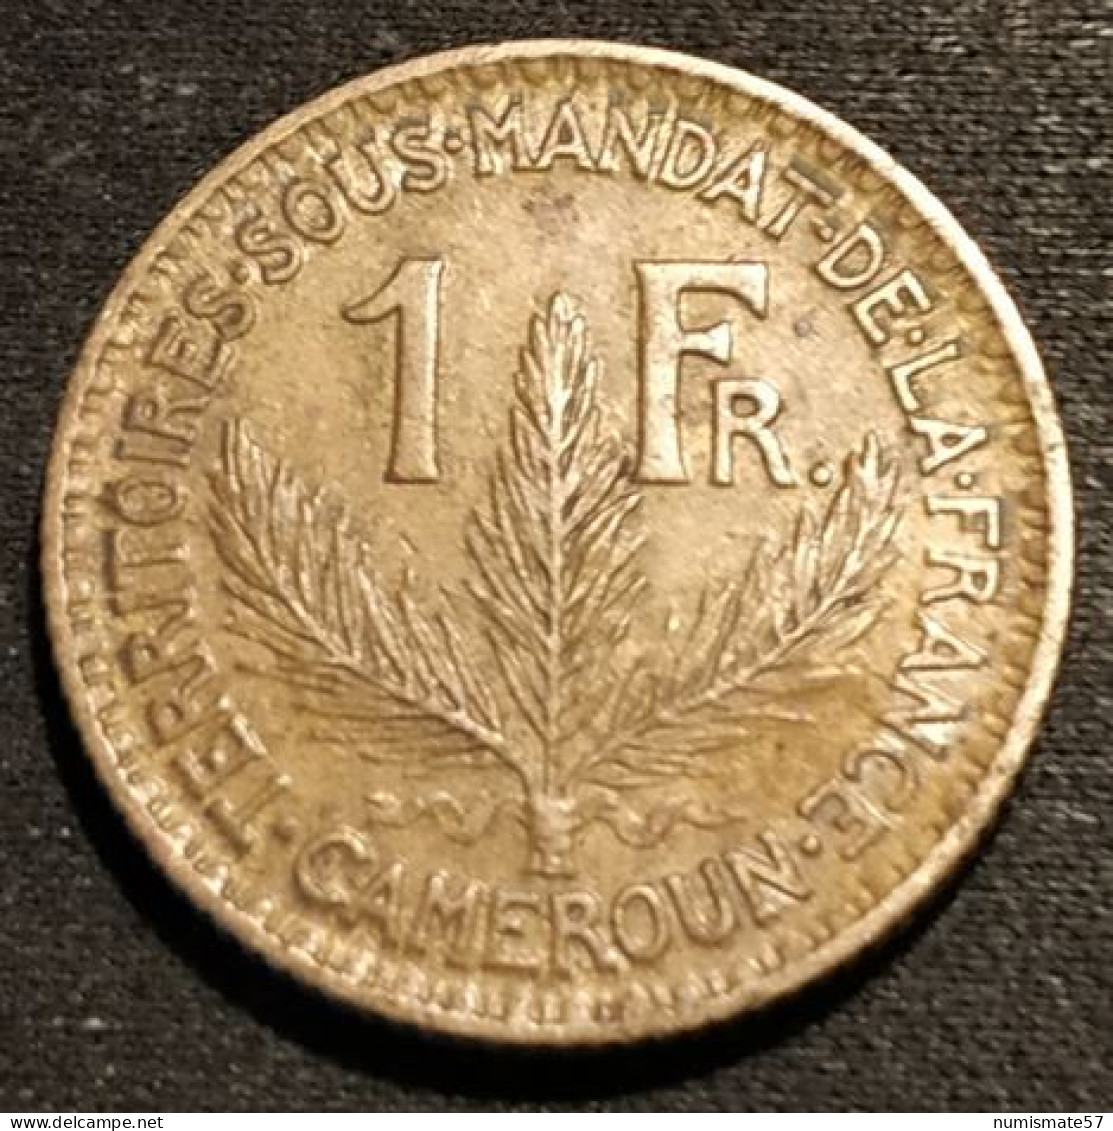 RARE - CAMEROUN - 1 FRANC 1926 - KM 2 - TERRITOIRES SOUS MANDAT DE LA FRANCE - Camerun